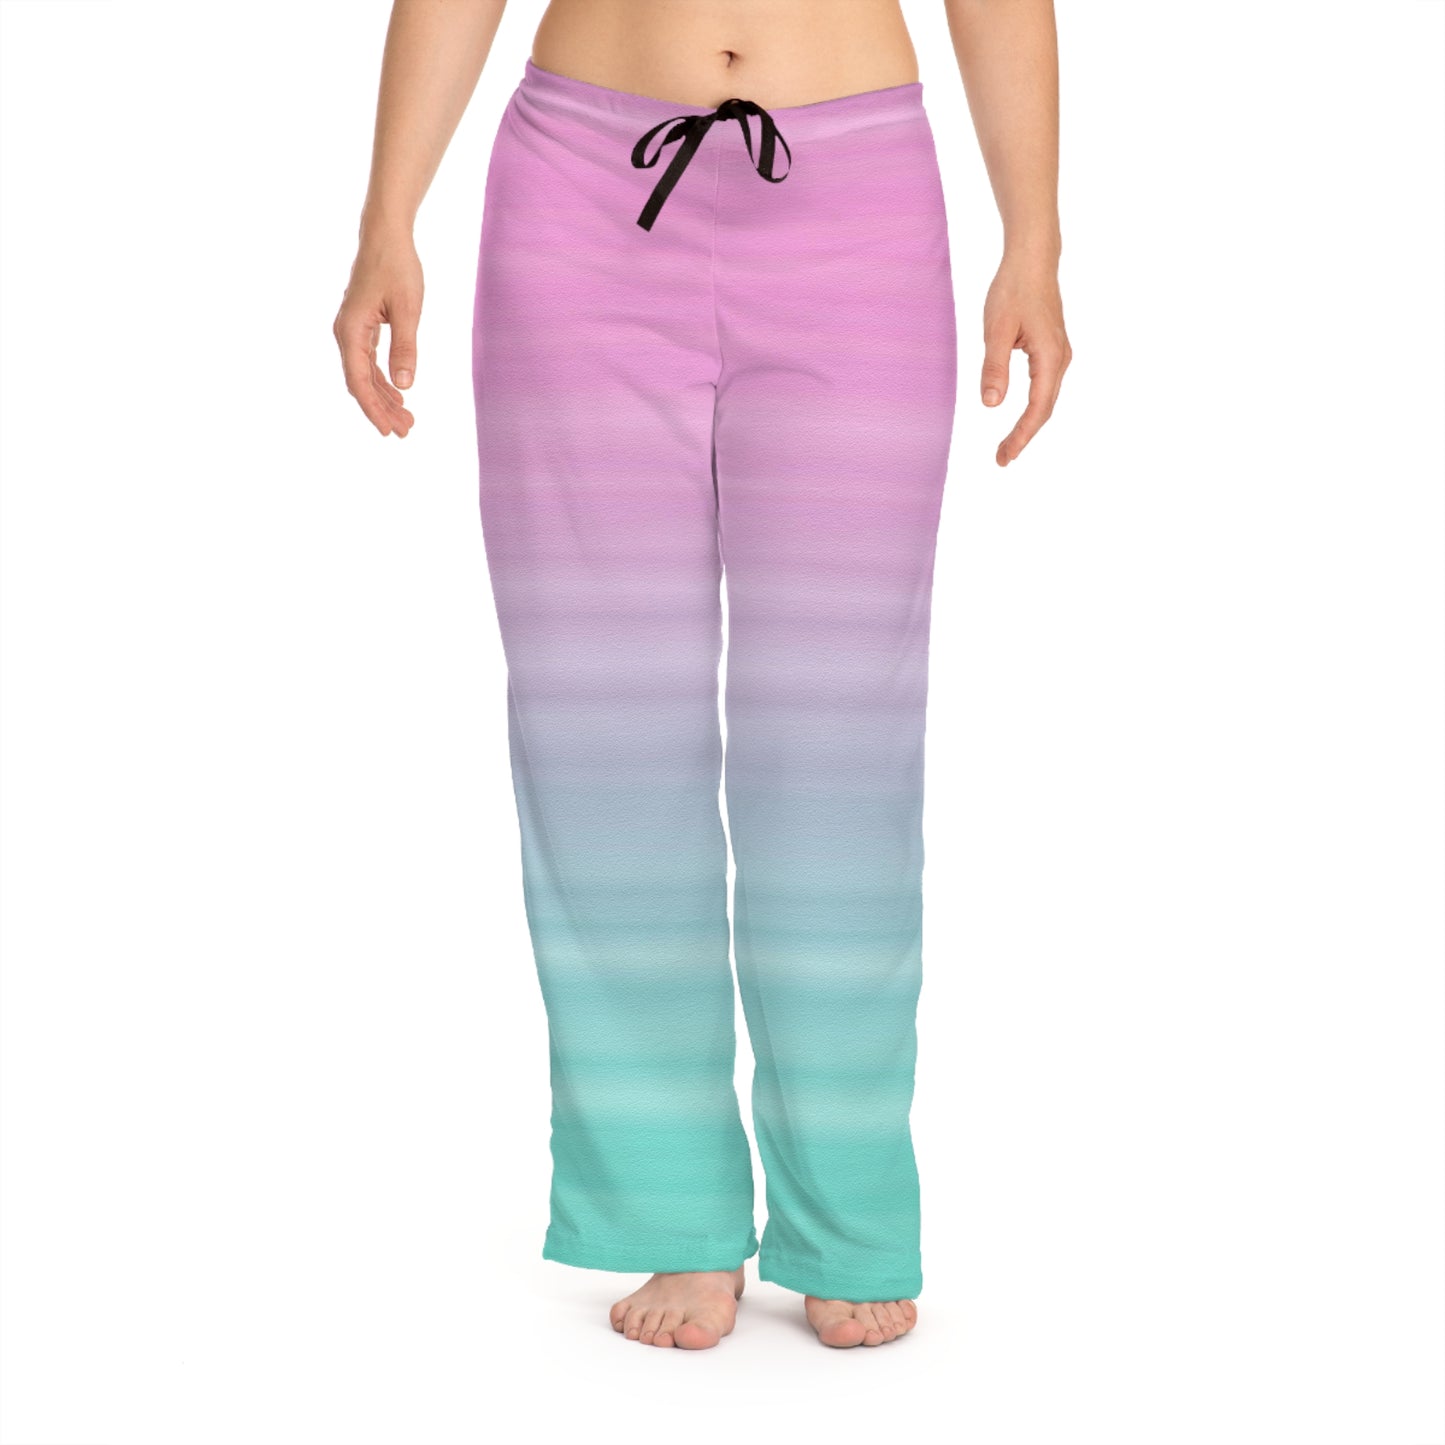 Lavender Aqua stripes pyjama pants